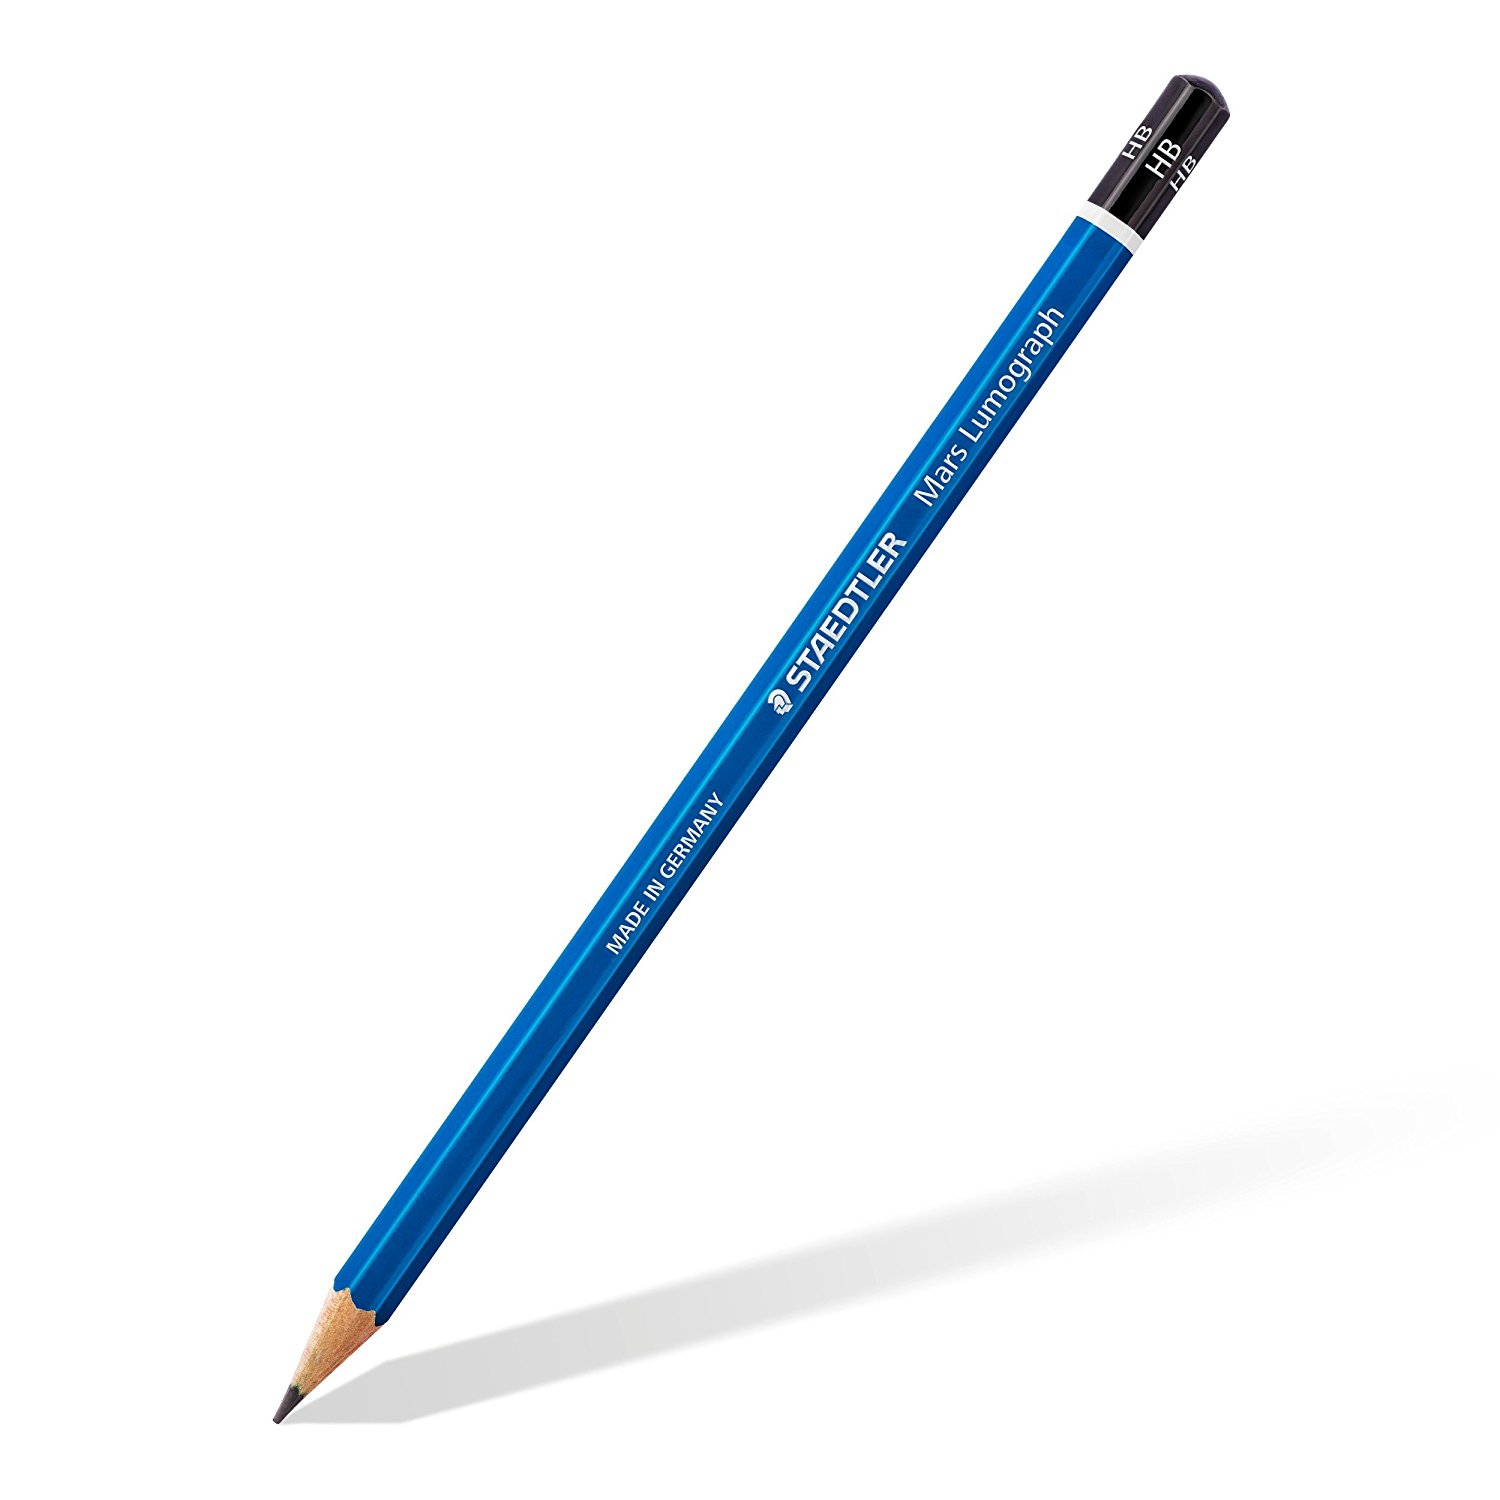 Amazon.com: STAEDTLER premium quality drawing pencil, Mars Lumograph ...